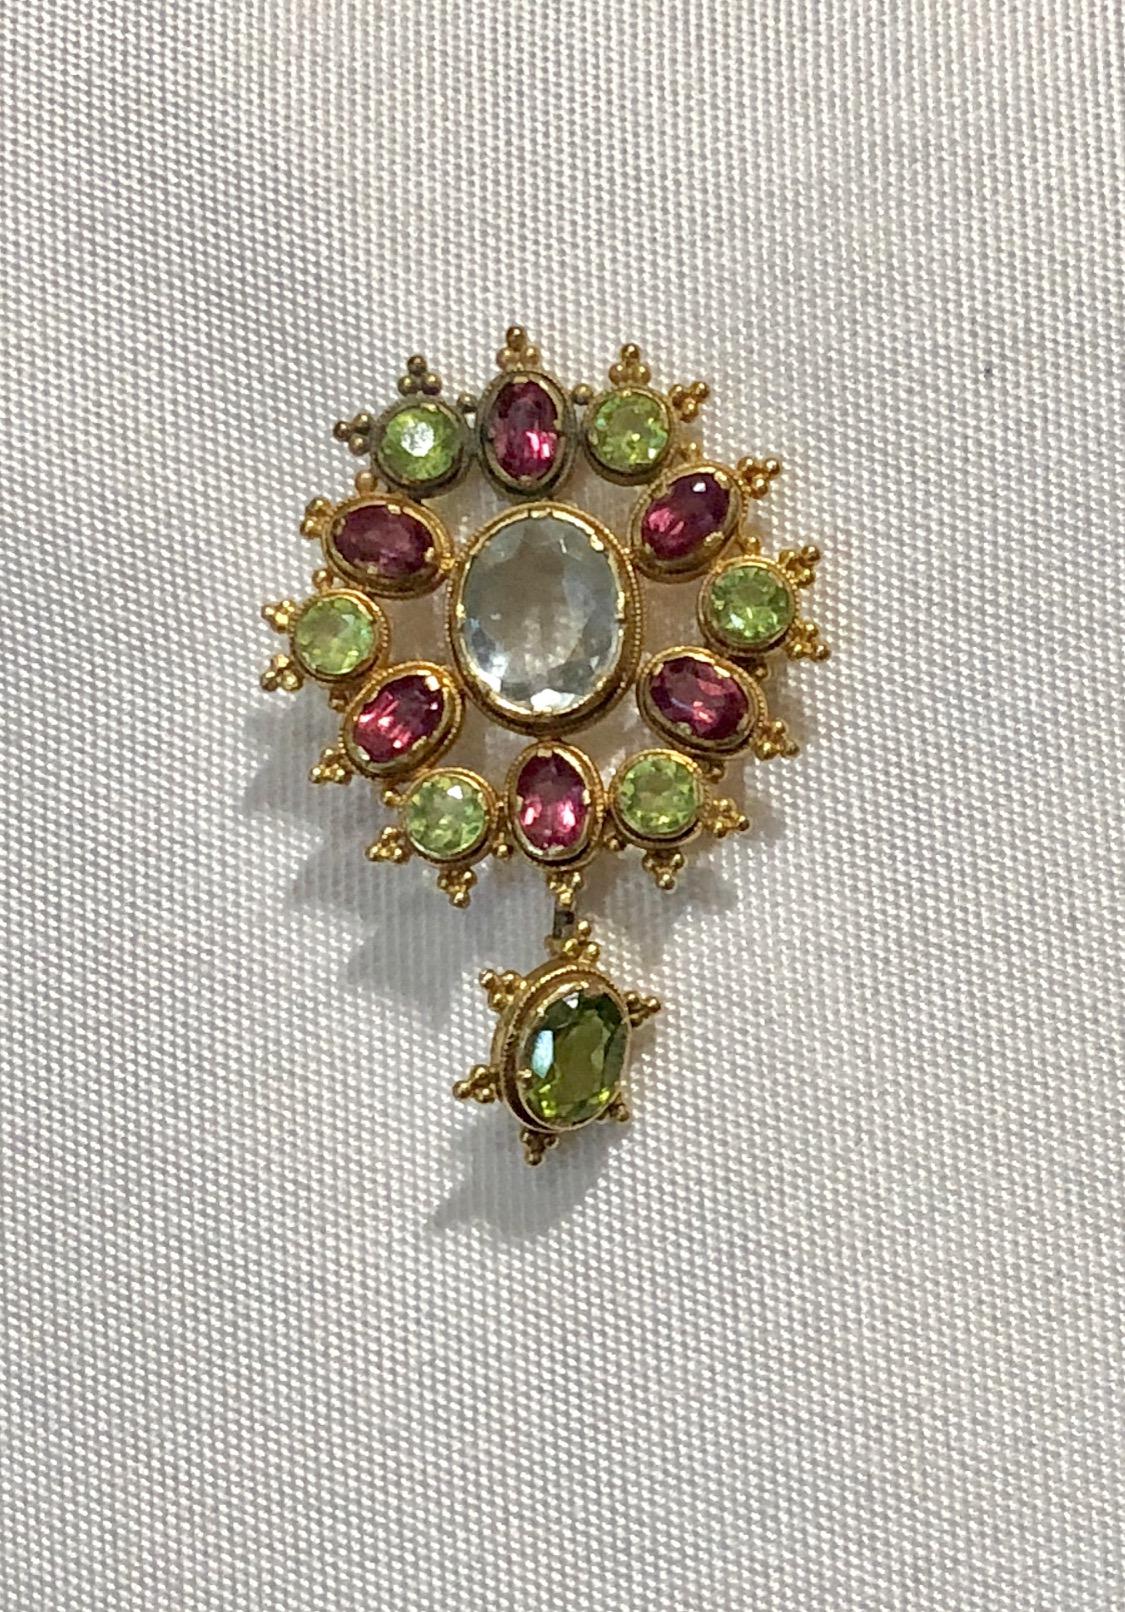 Semi precious stones pendant with brooch attachment, aquamarine, peridot,  pink tourmaline set in 18k gold. Detachable pendant piece. Ca 1940s
Stamped